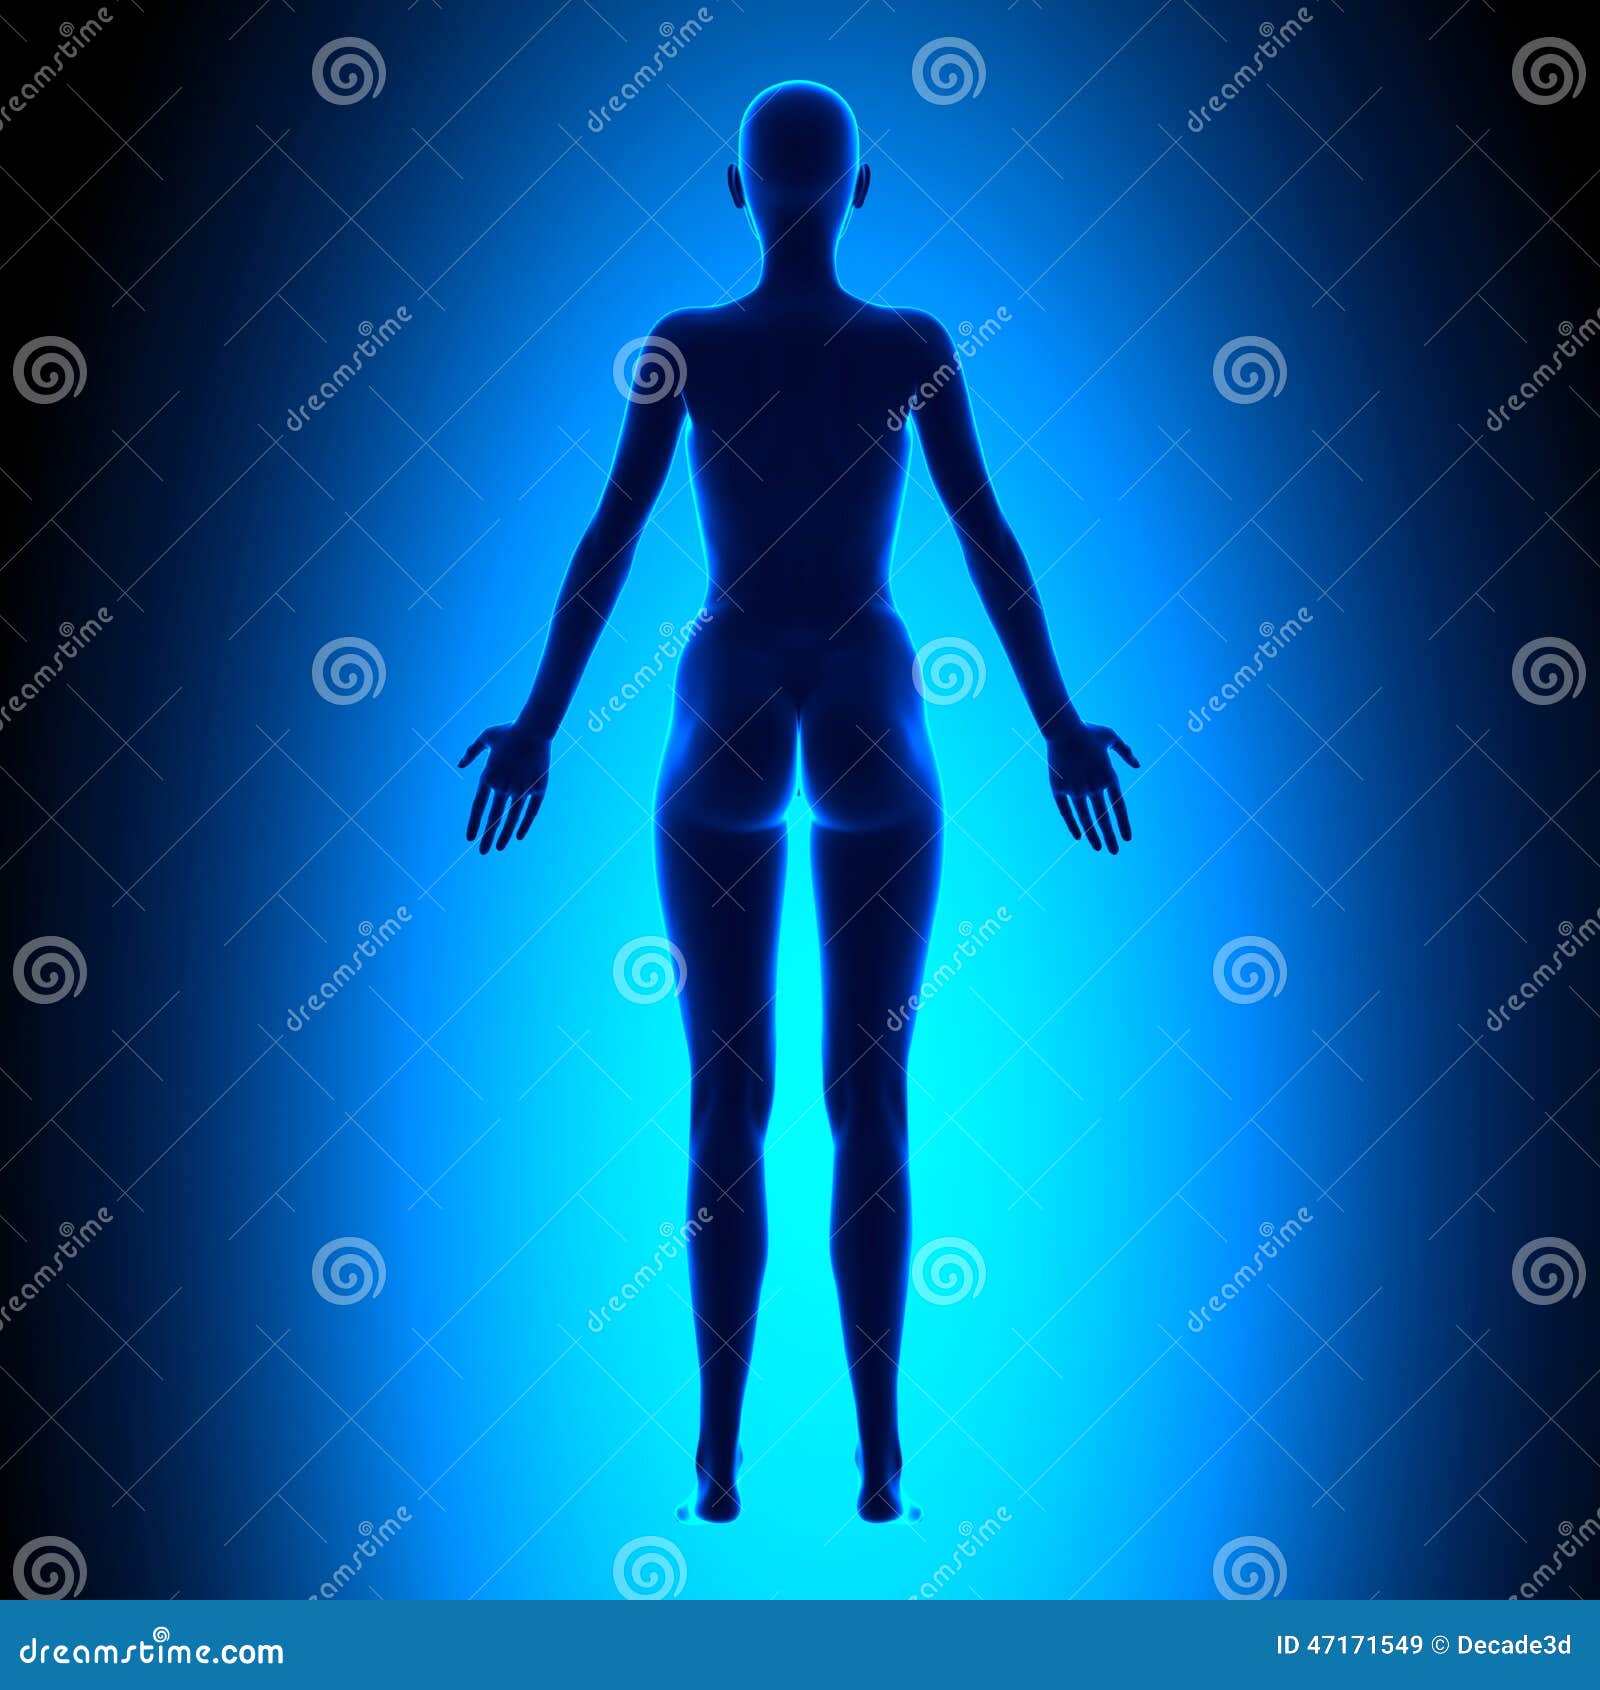 Full Female Body - Back View - Blue Concept Stock Illustration - Image